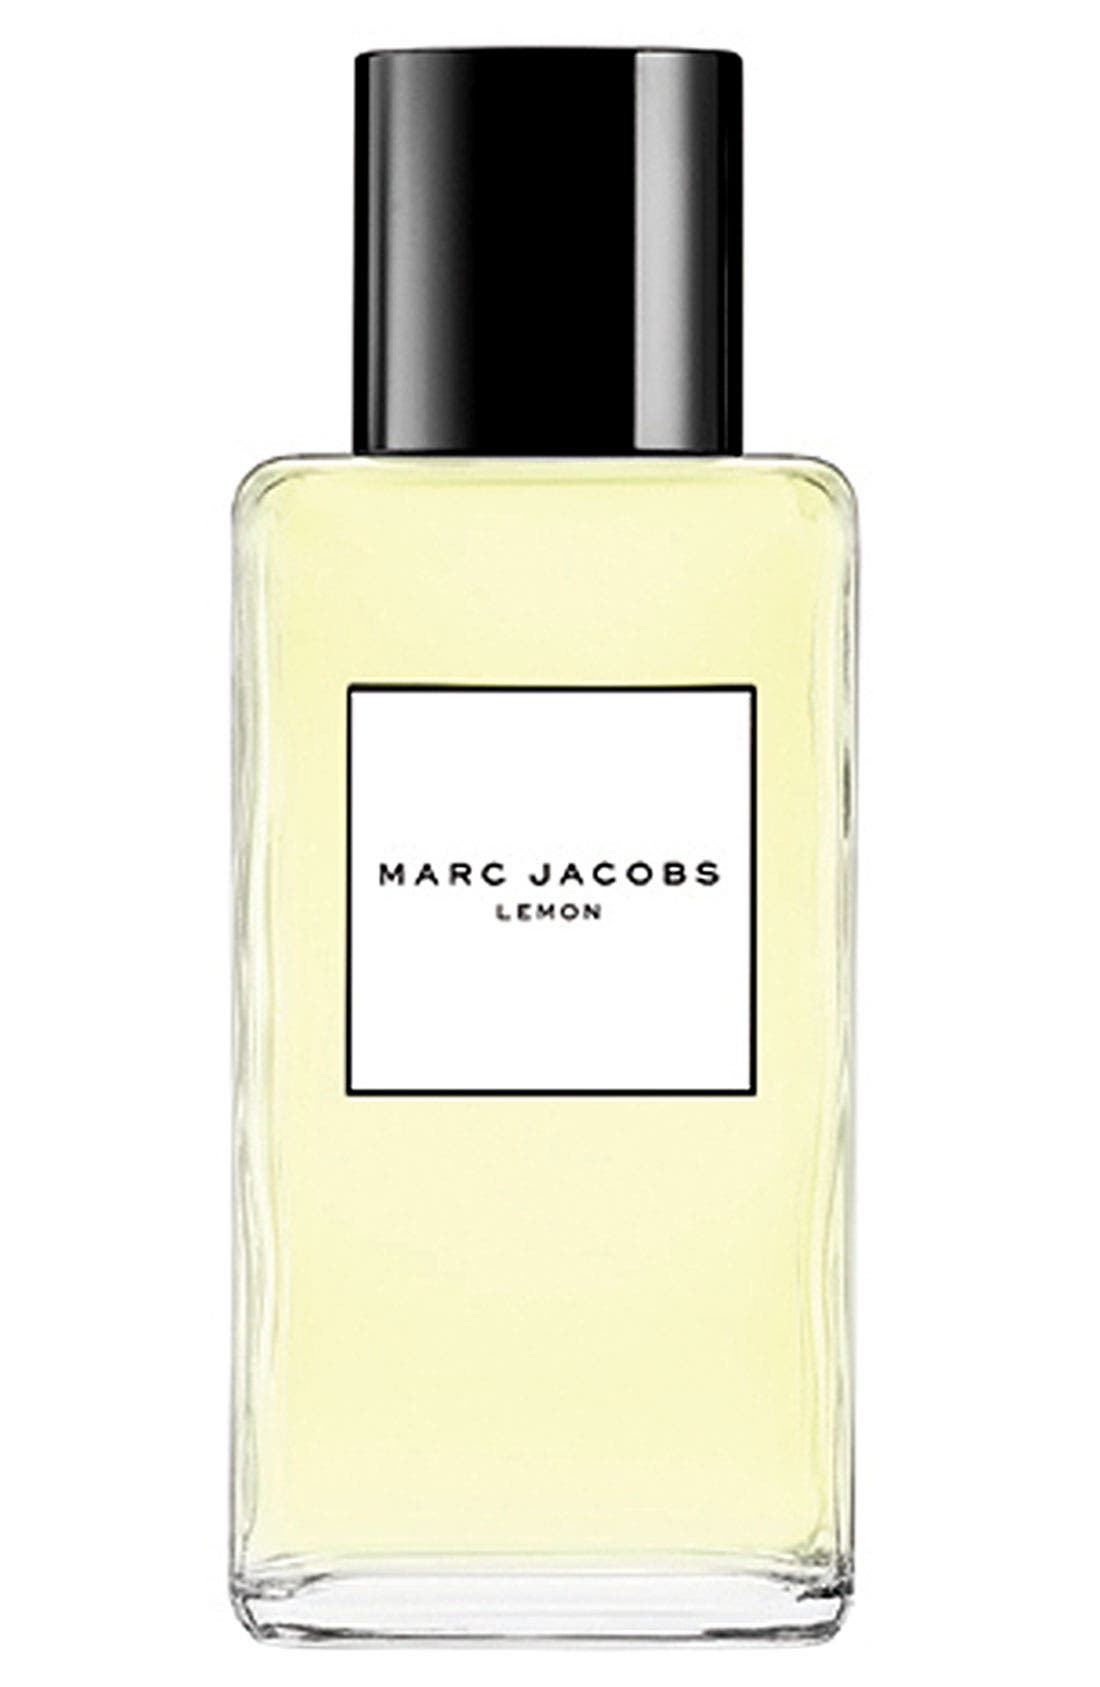 marc jacobs lemon dress